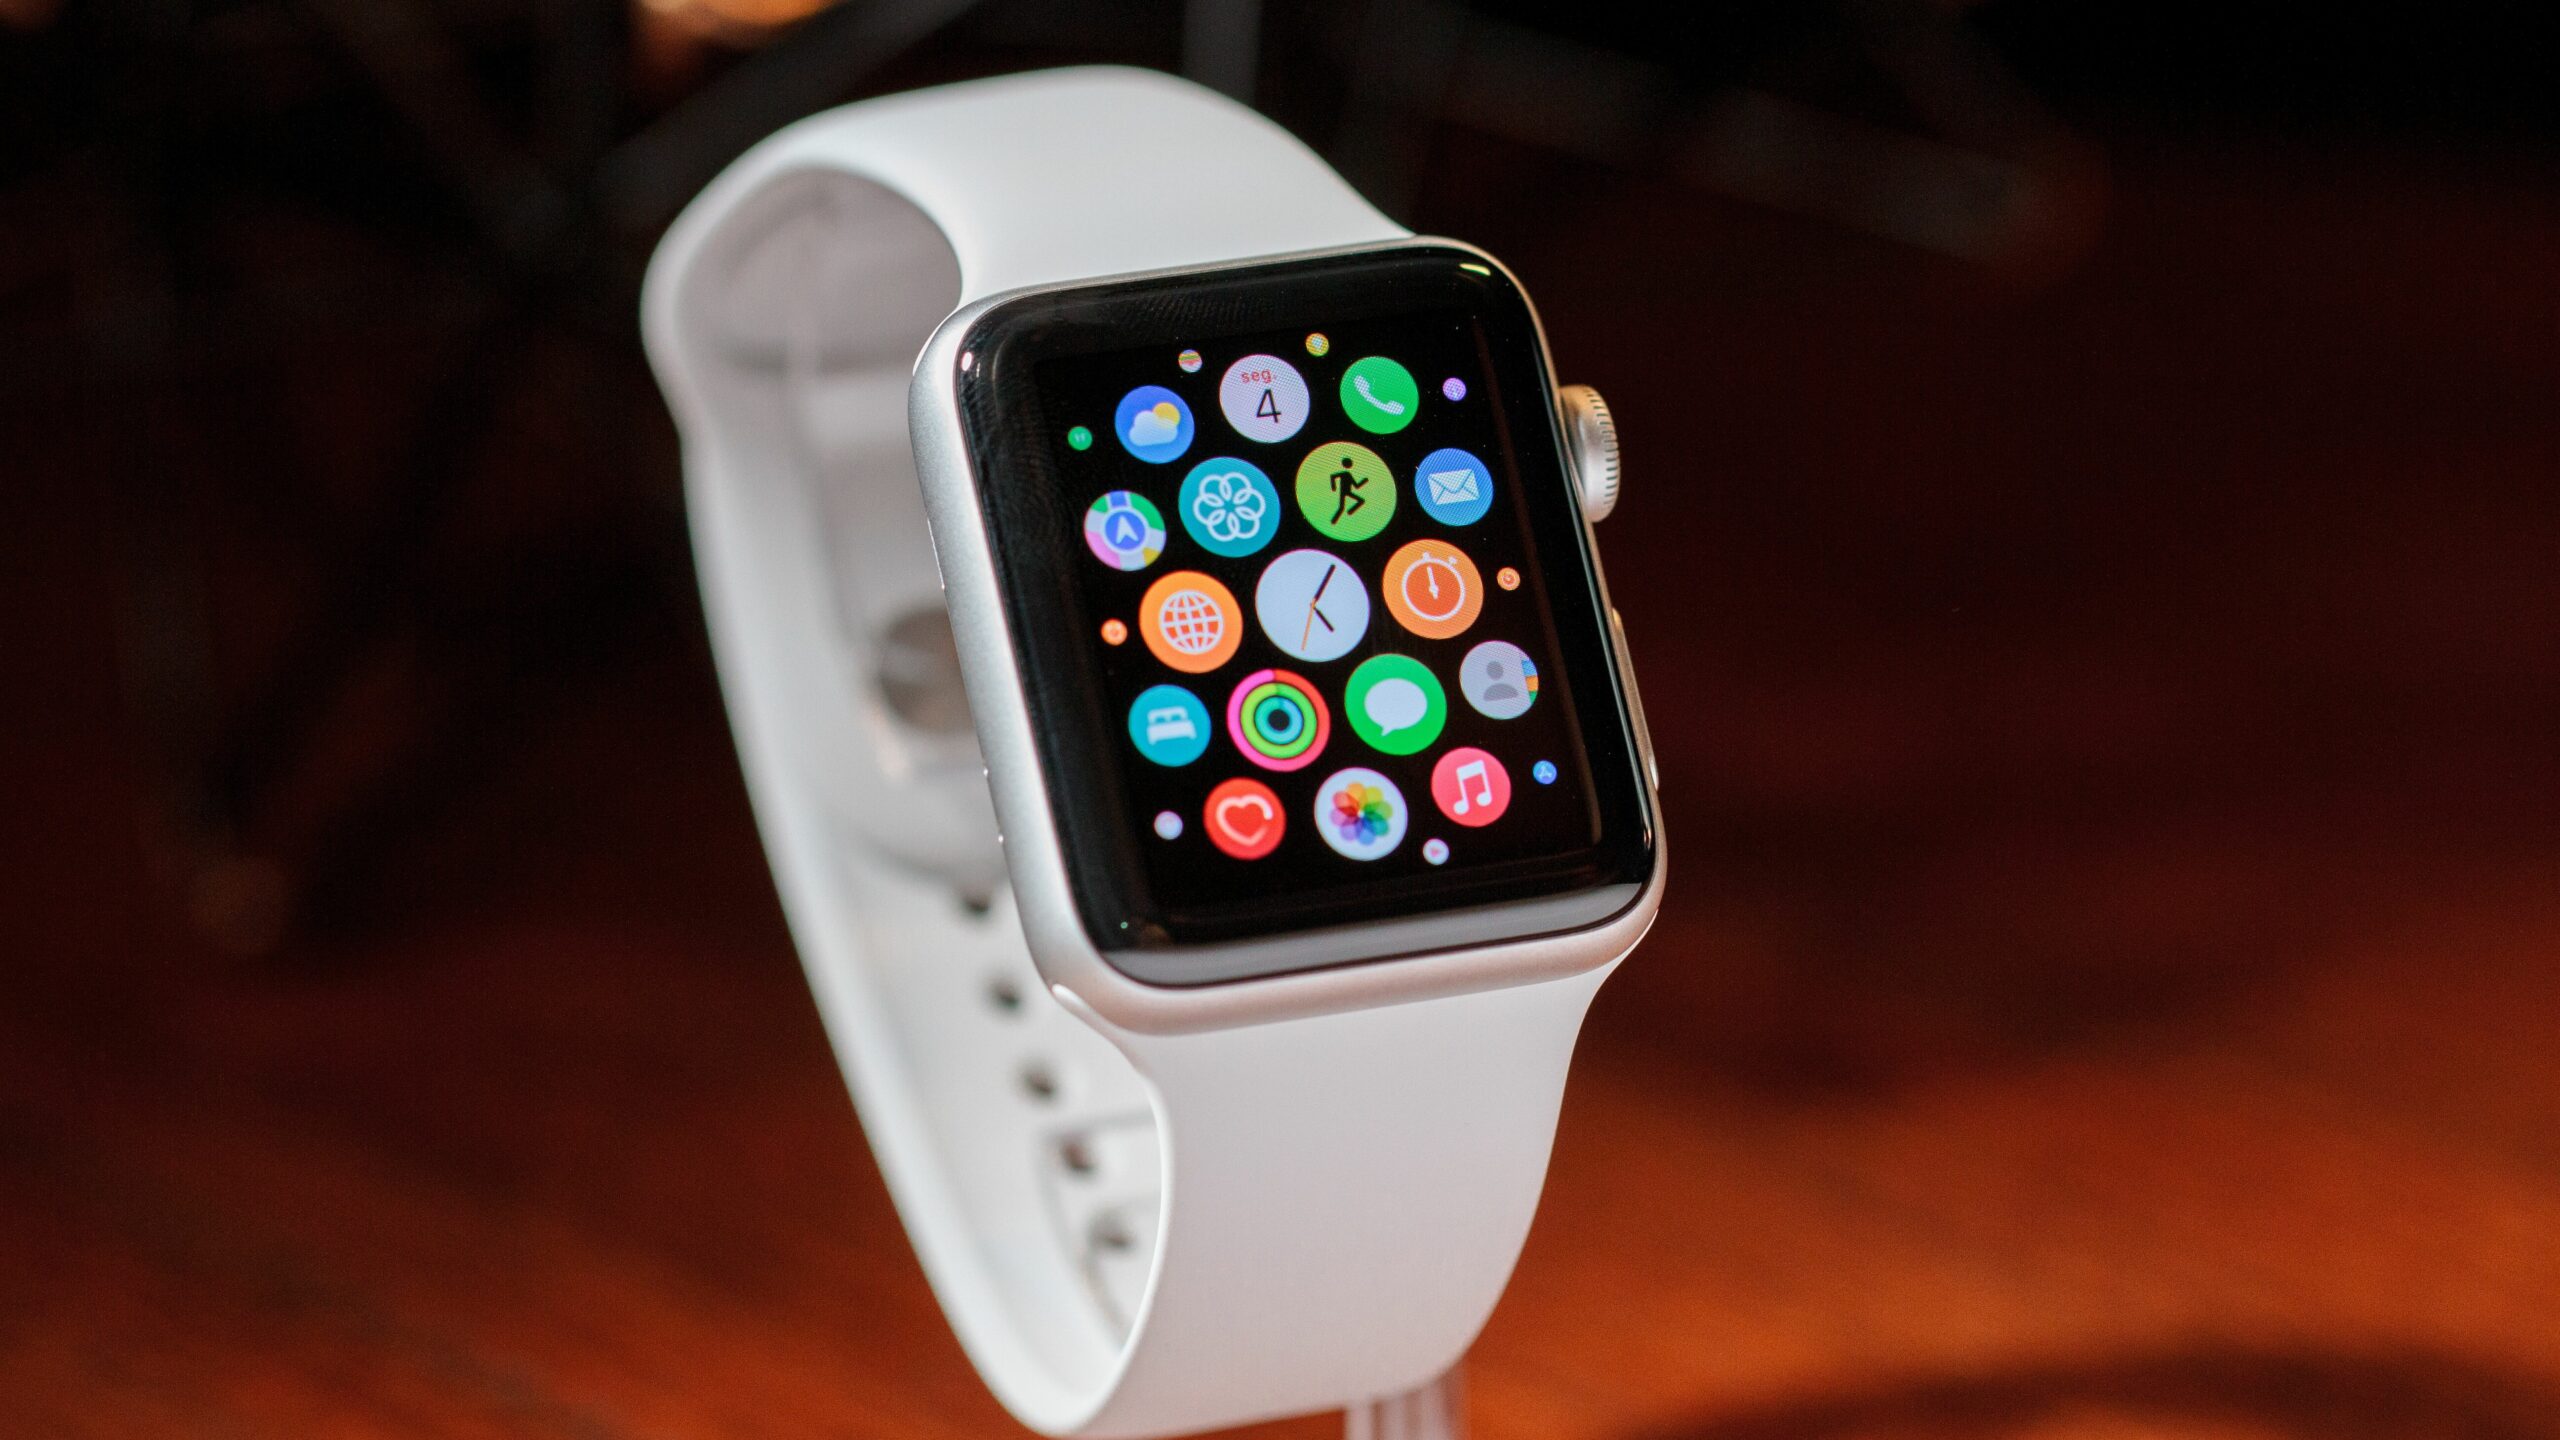 Explore a funcionalidade da tela do Apple Watch Series 3 e descubra alternativas de reparo para garantir seu desempenho ideal